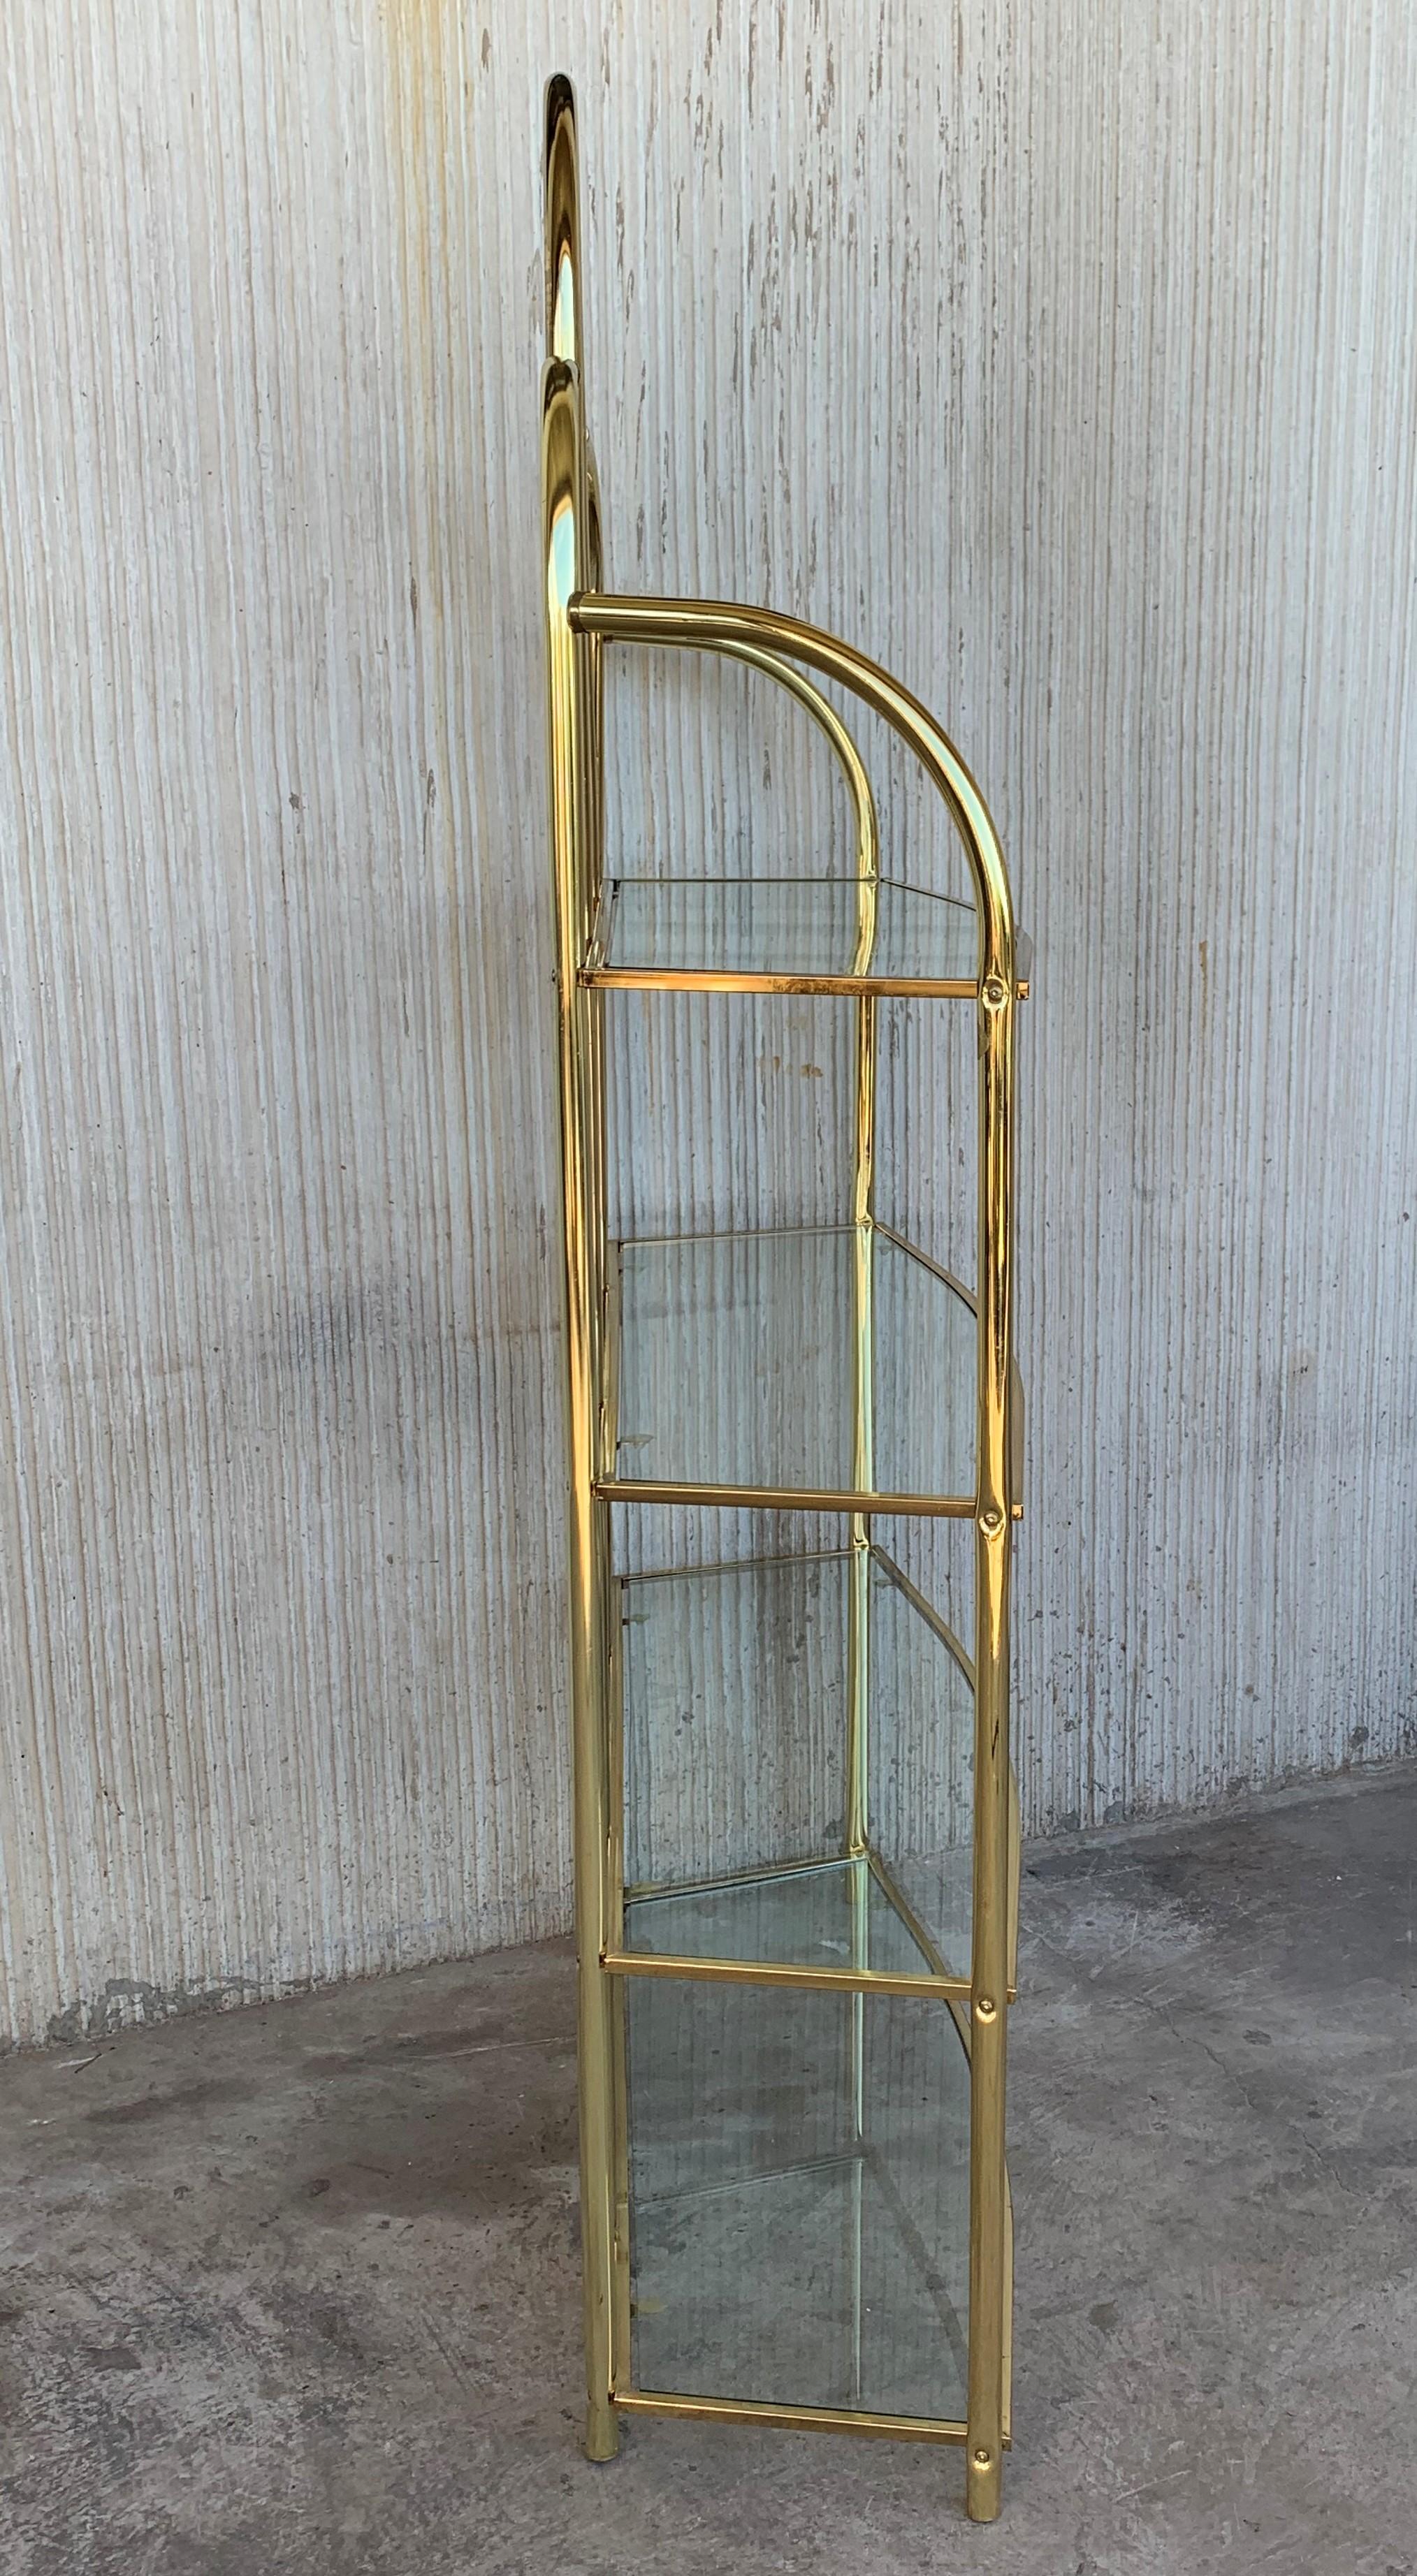 Italian Vintage Brass Étagère Arched Glass Display Shelf with Four Shelves